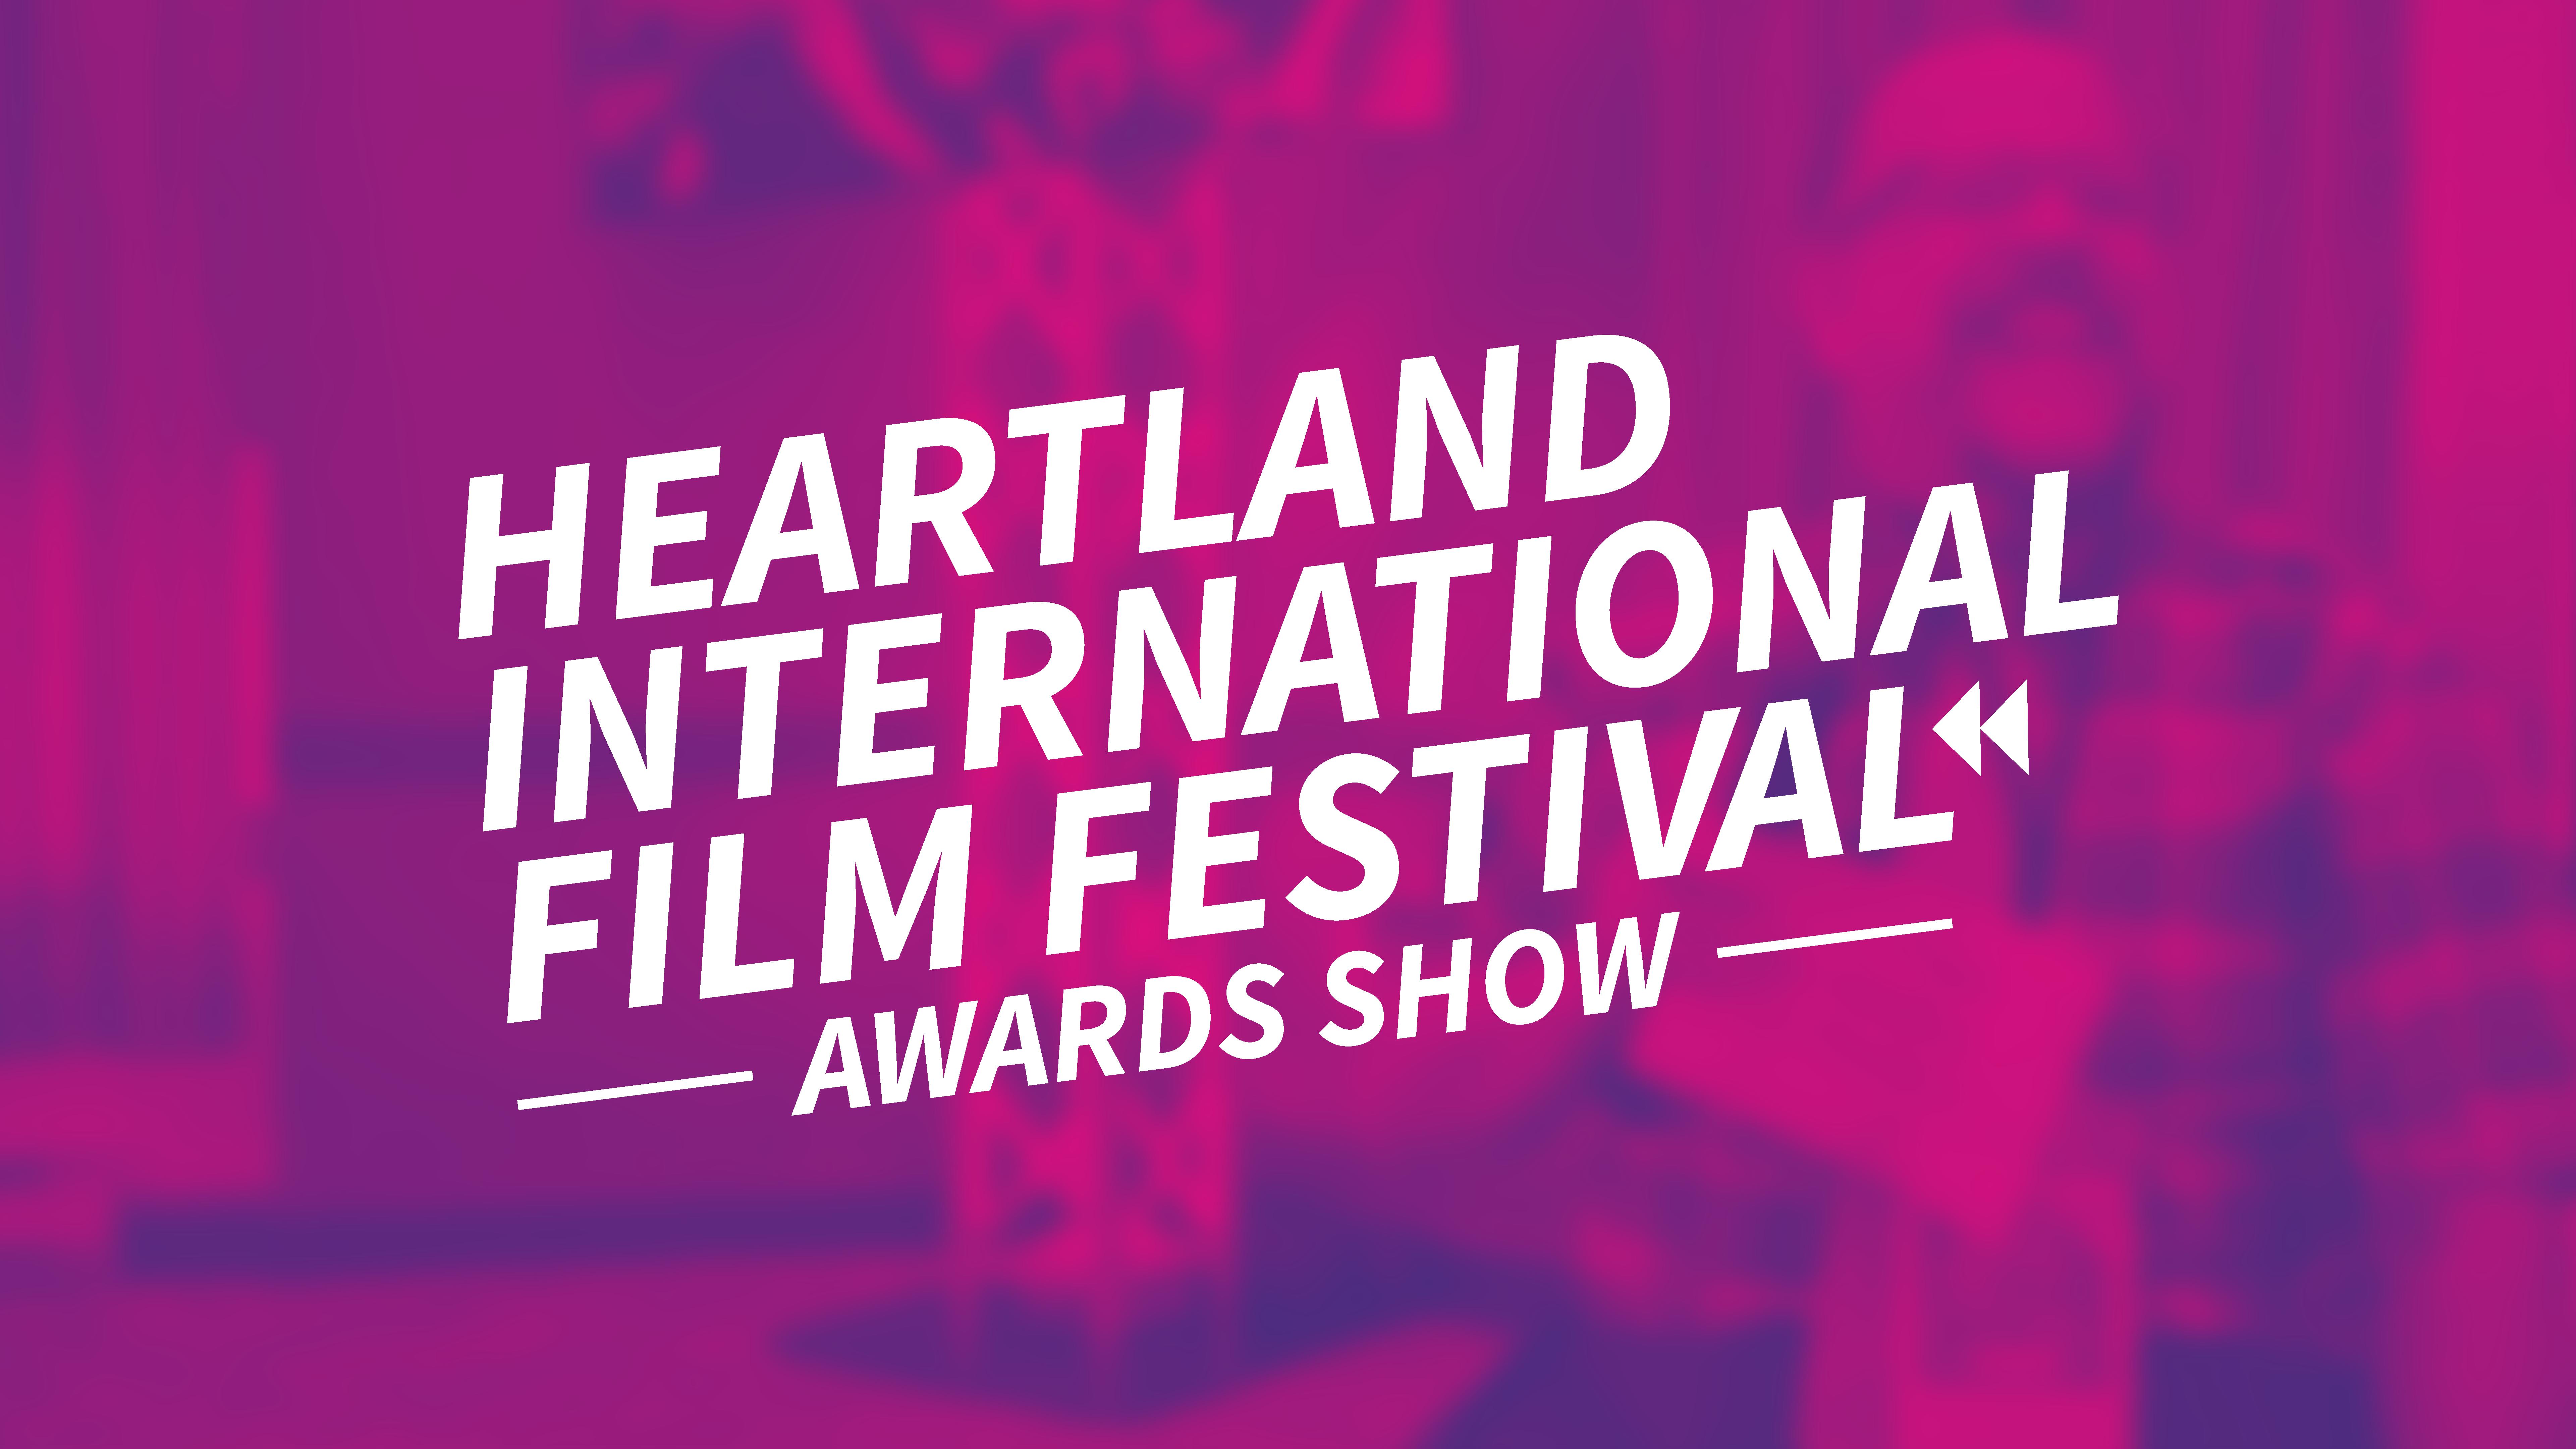 Awards Presentation | Heartland International Film Festival Awards Presentation | Heartland International Film Festival